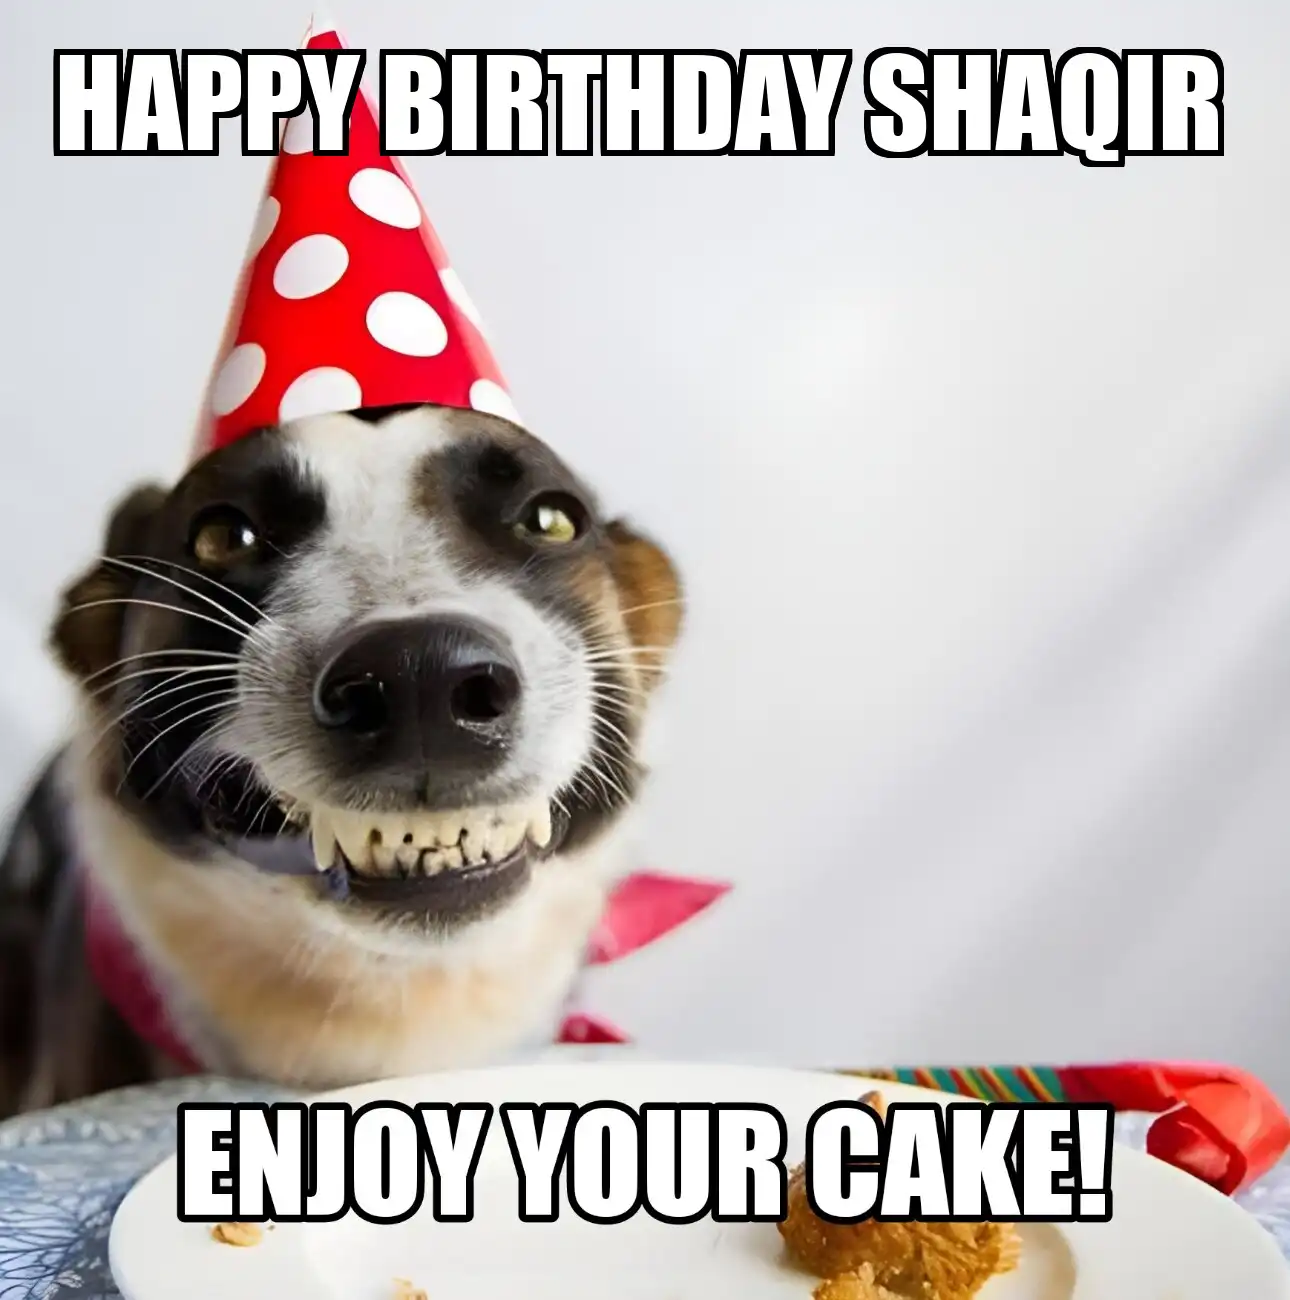 Happy Birthday Shaqir Enjoy Your Cake Dog Meme